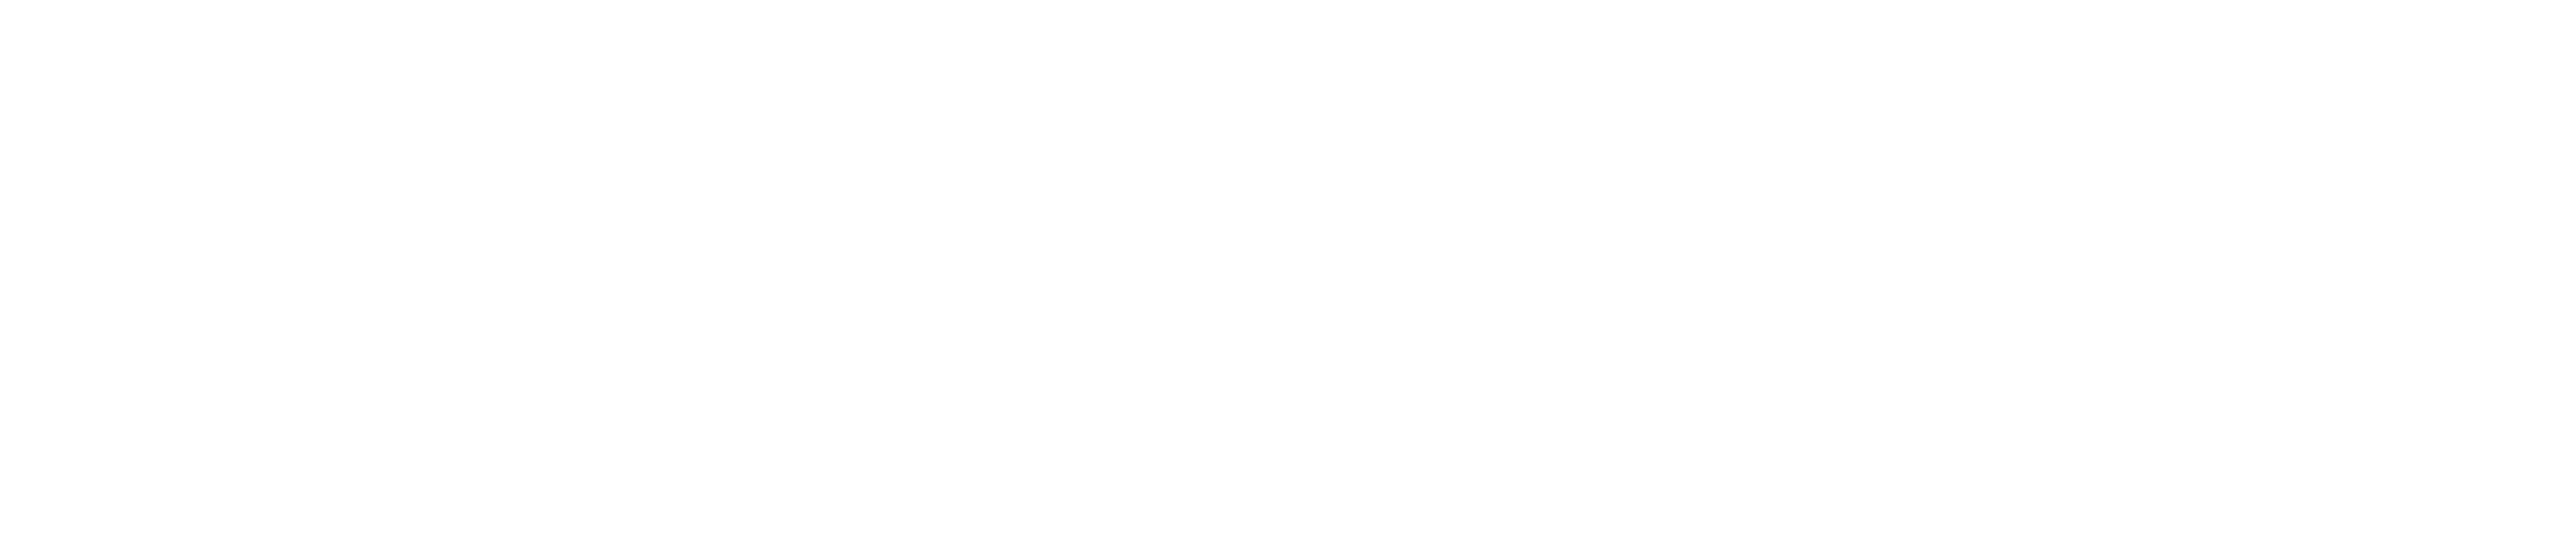 Tangerine life-logo-white